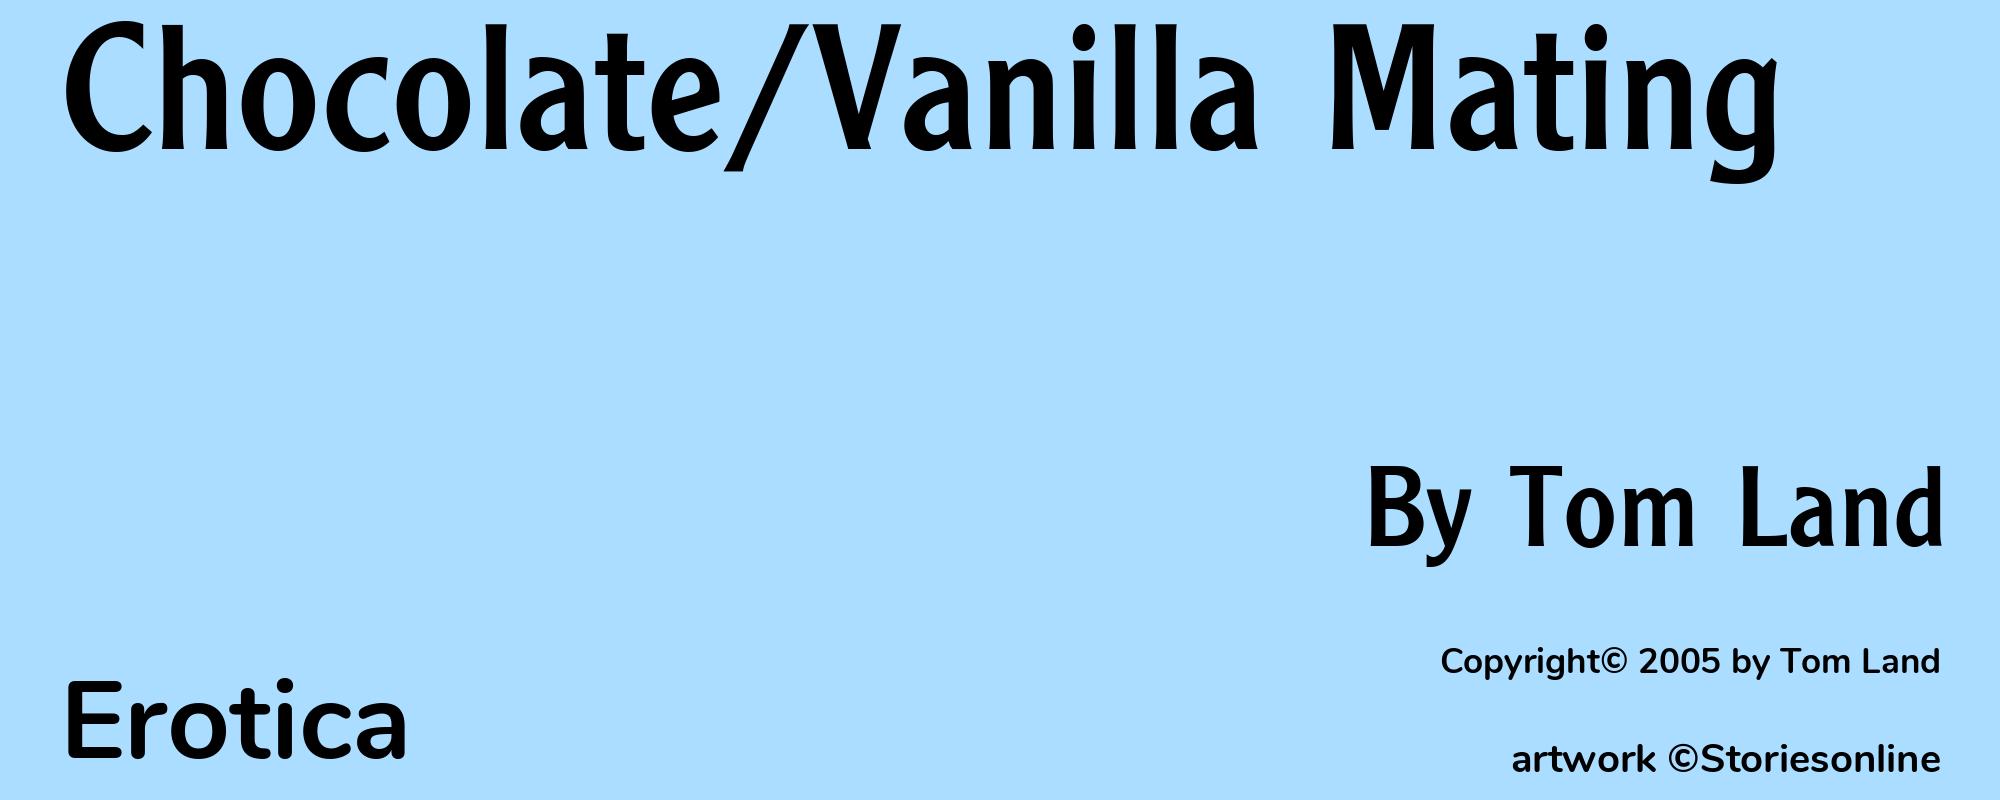 Chocolate/Vanilla Mating - Cover